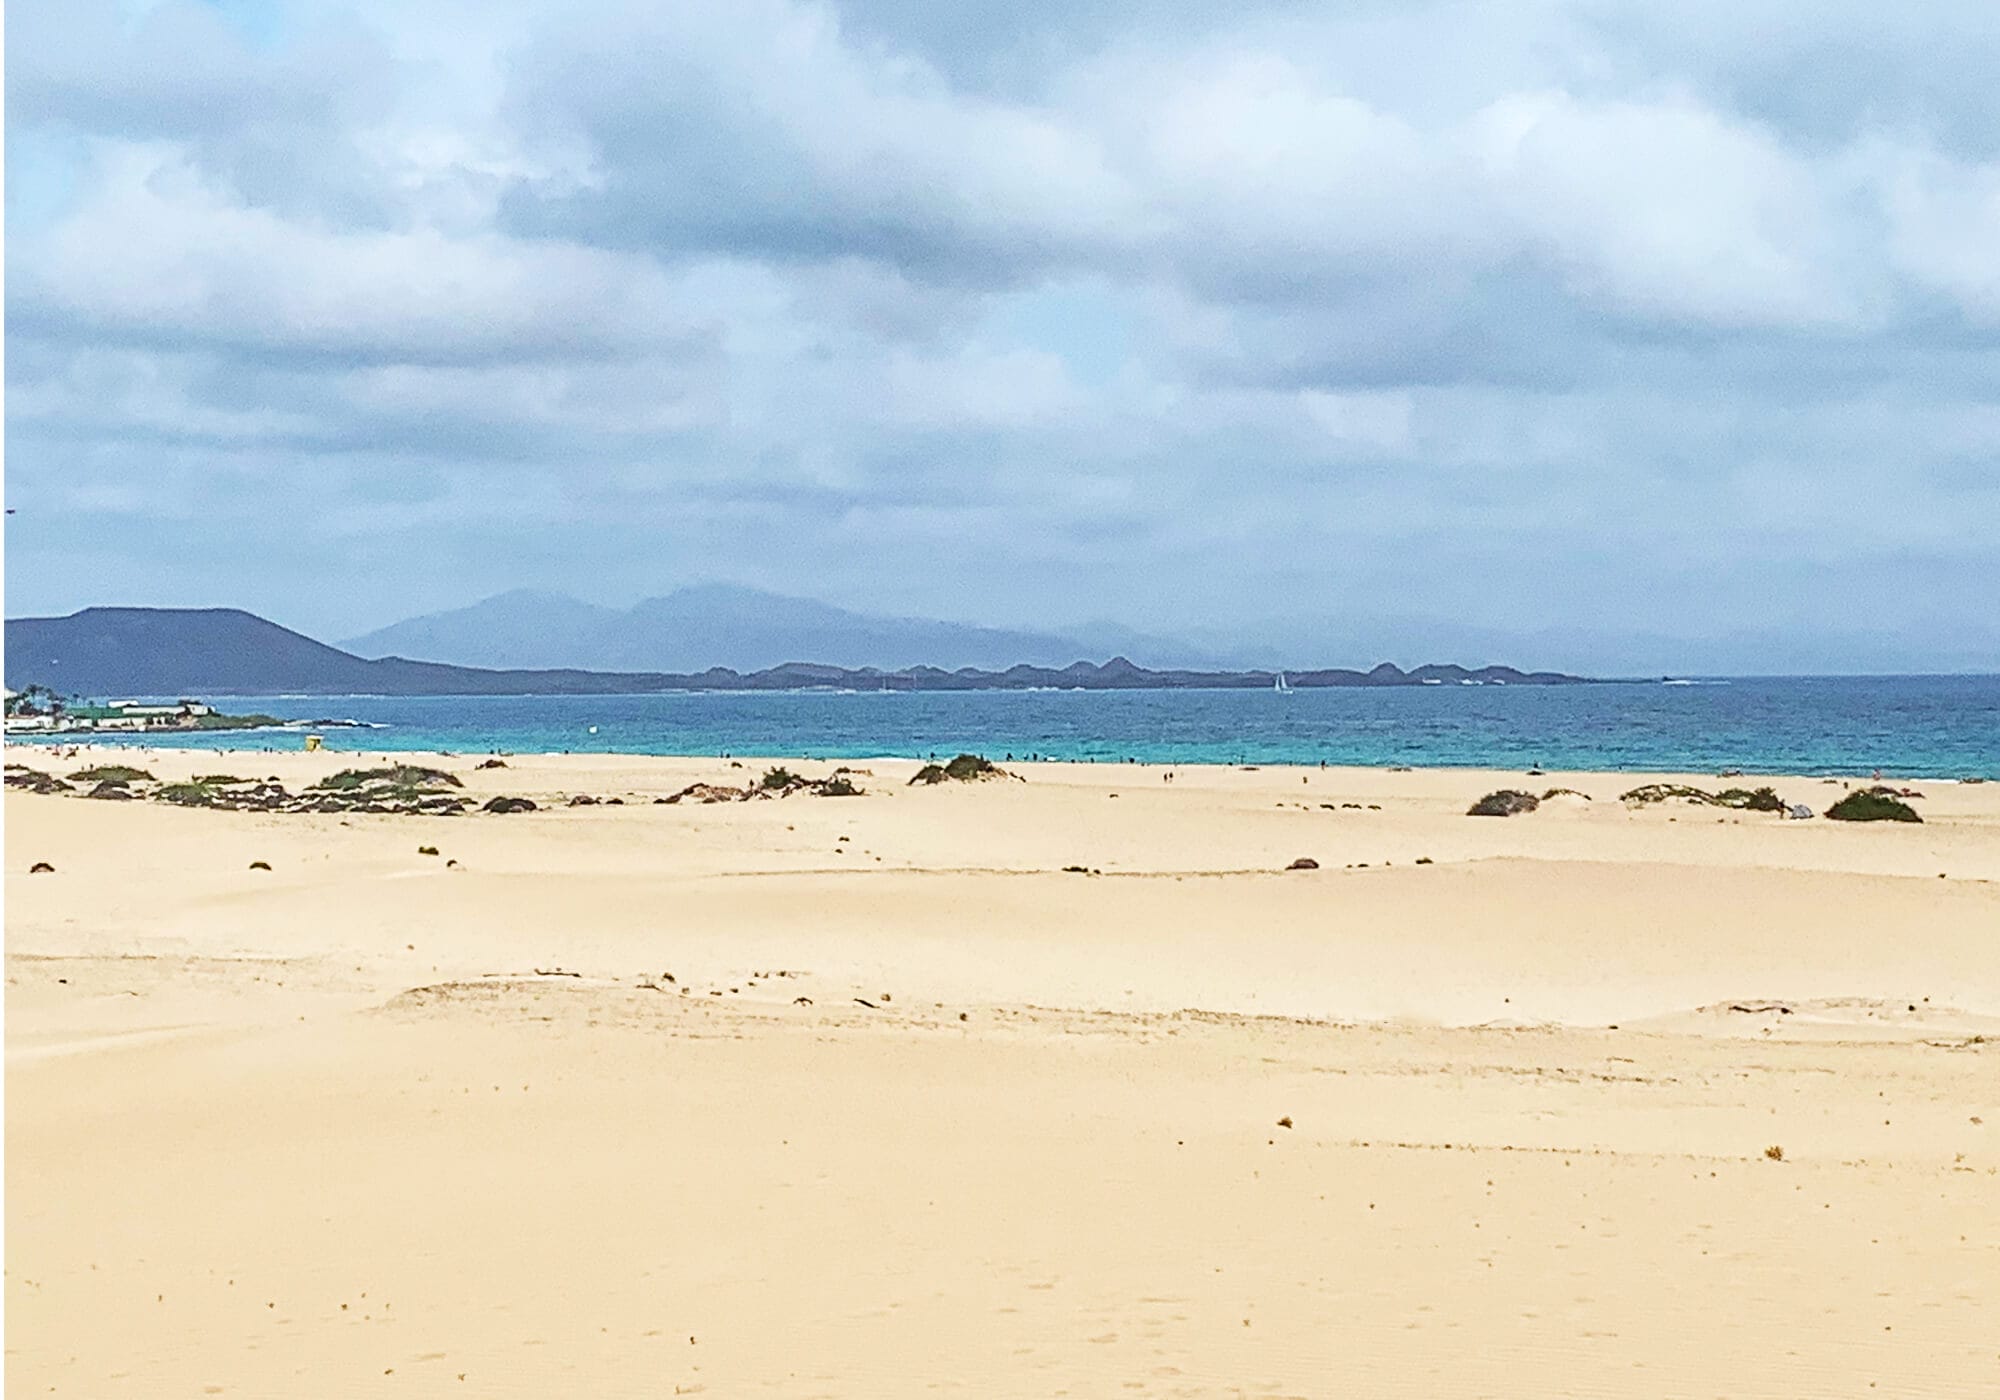 Sand dunes leading to Corralejo's ocean, Fuerteventura